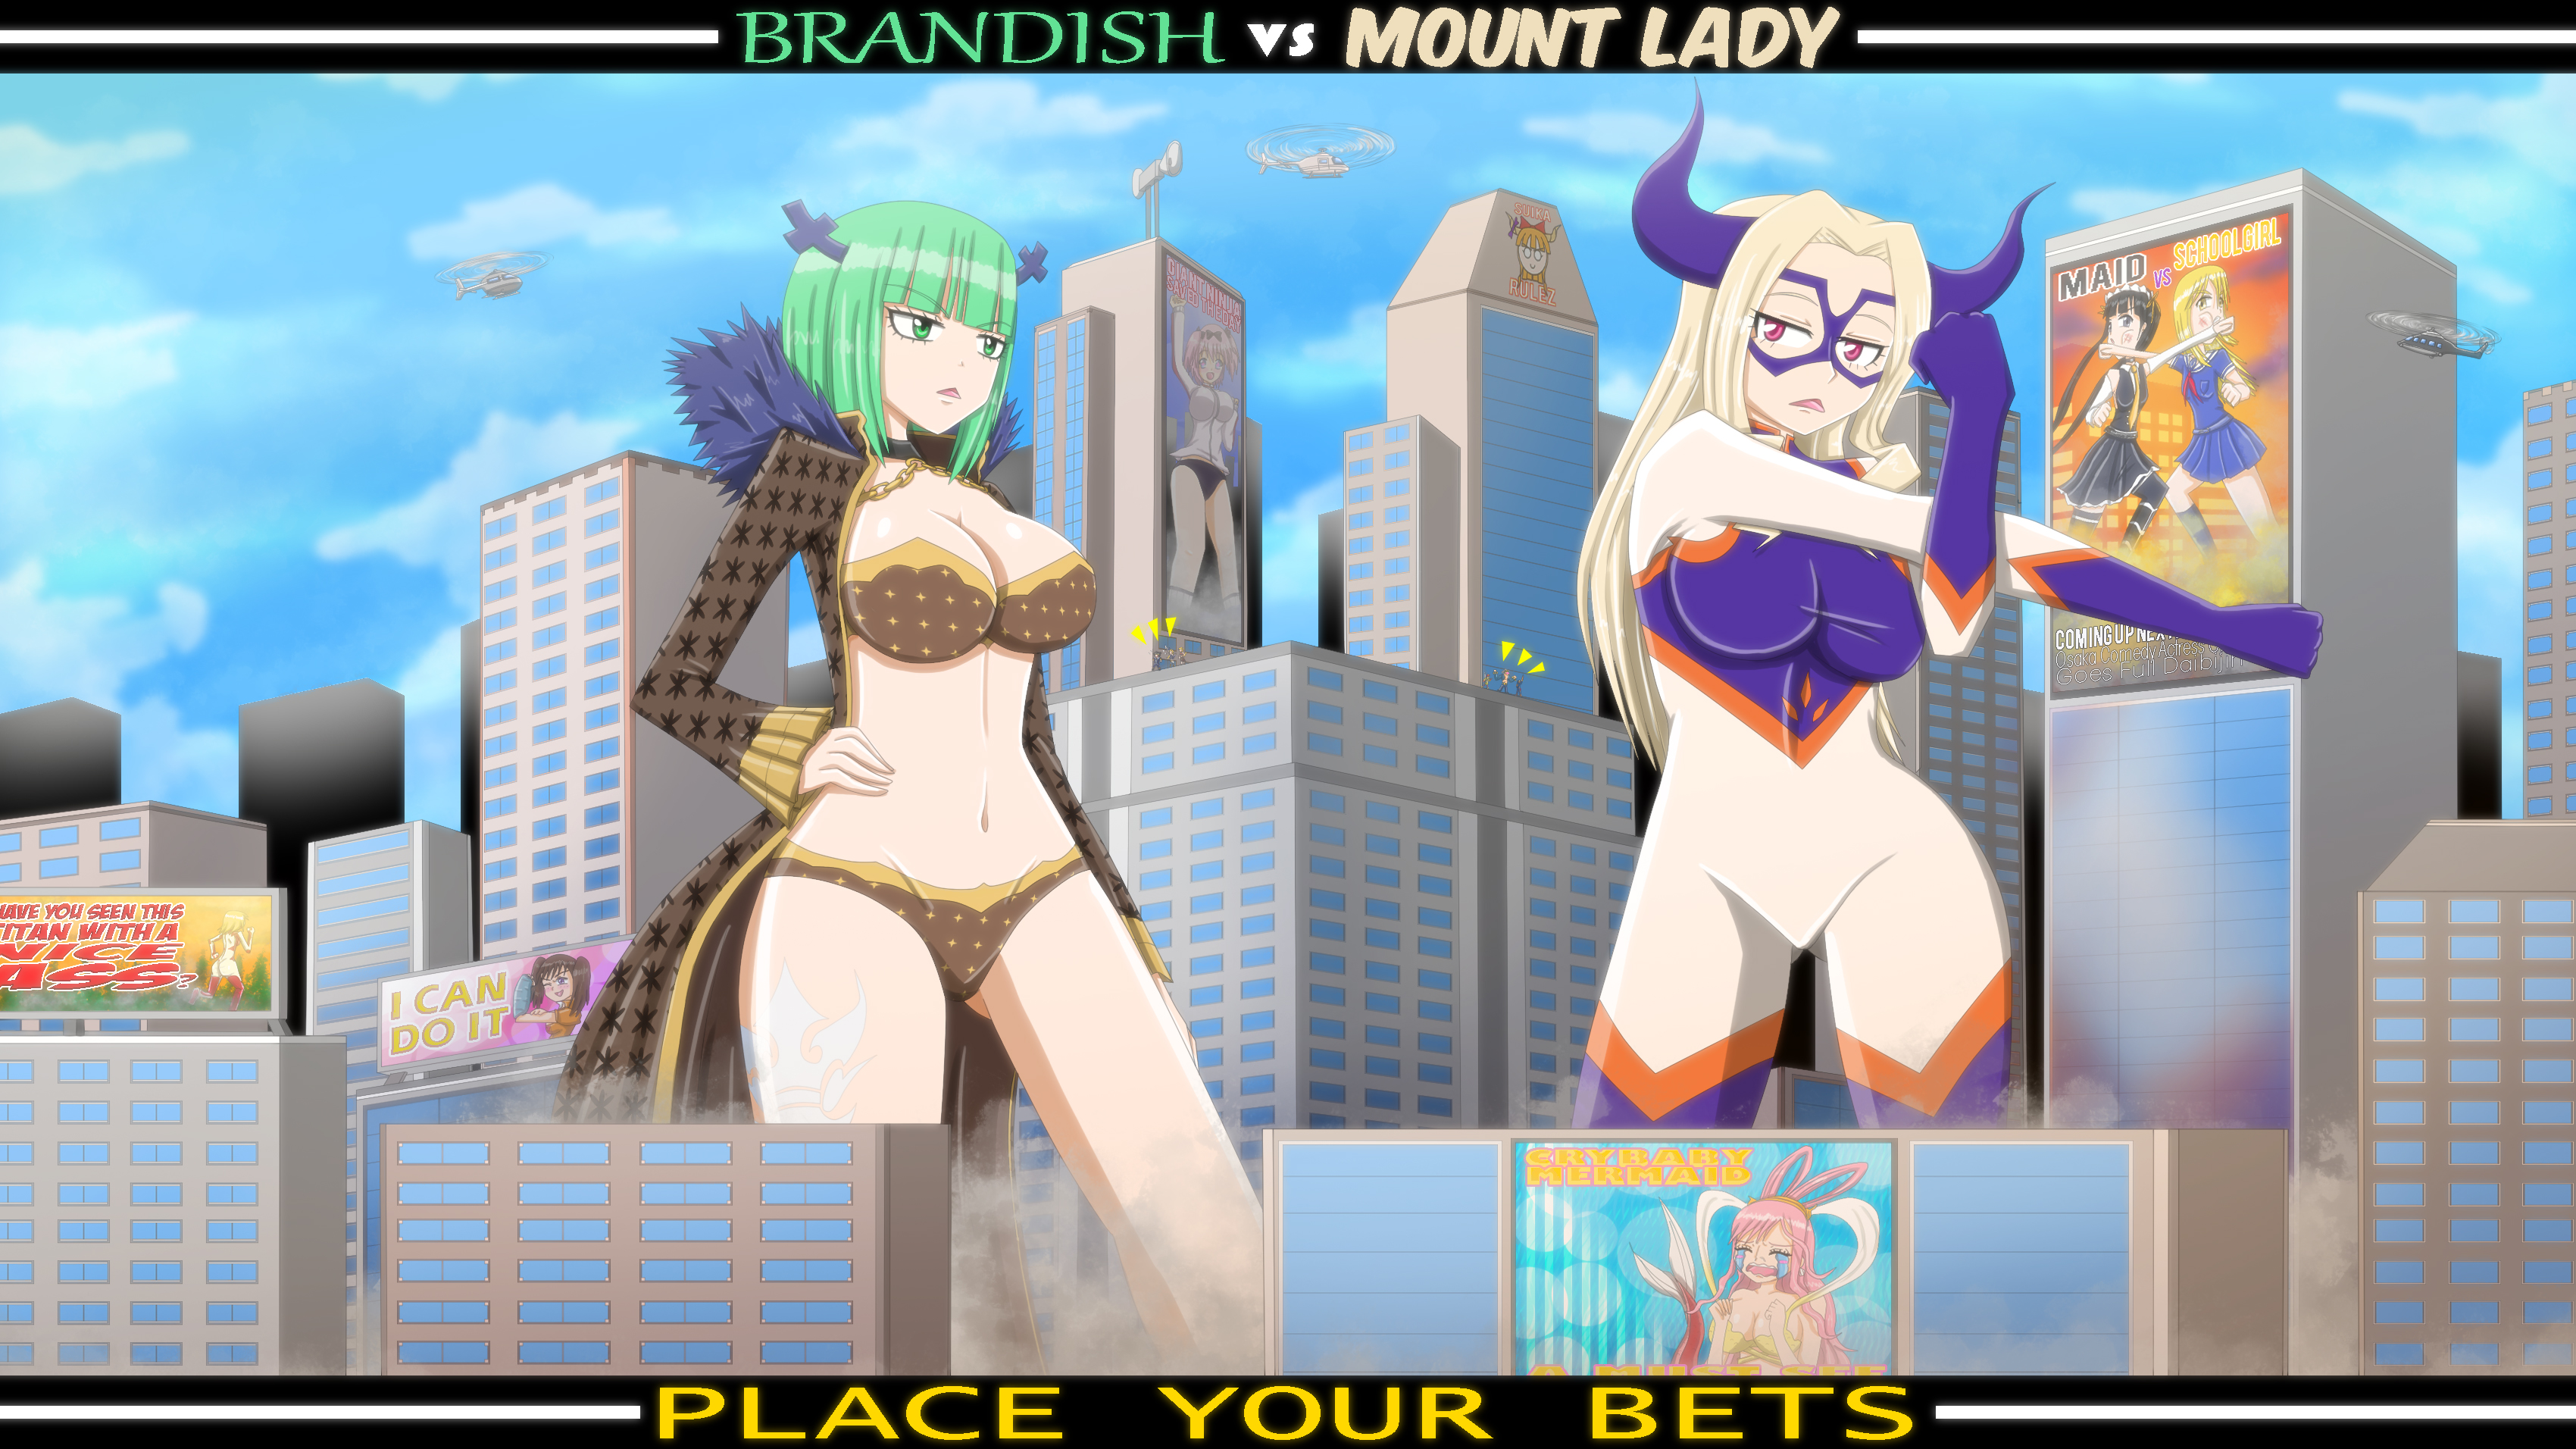 Brandish VS Mount Lady.jpg. 